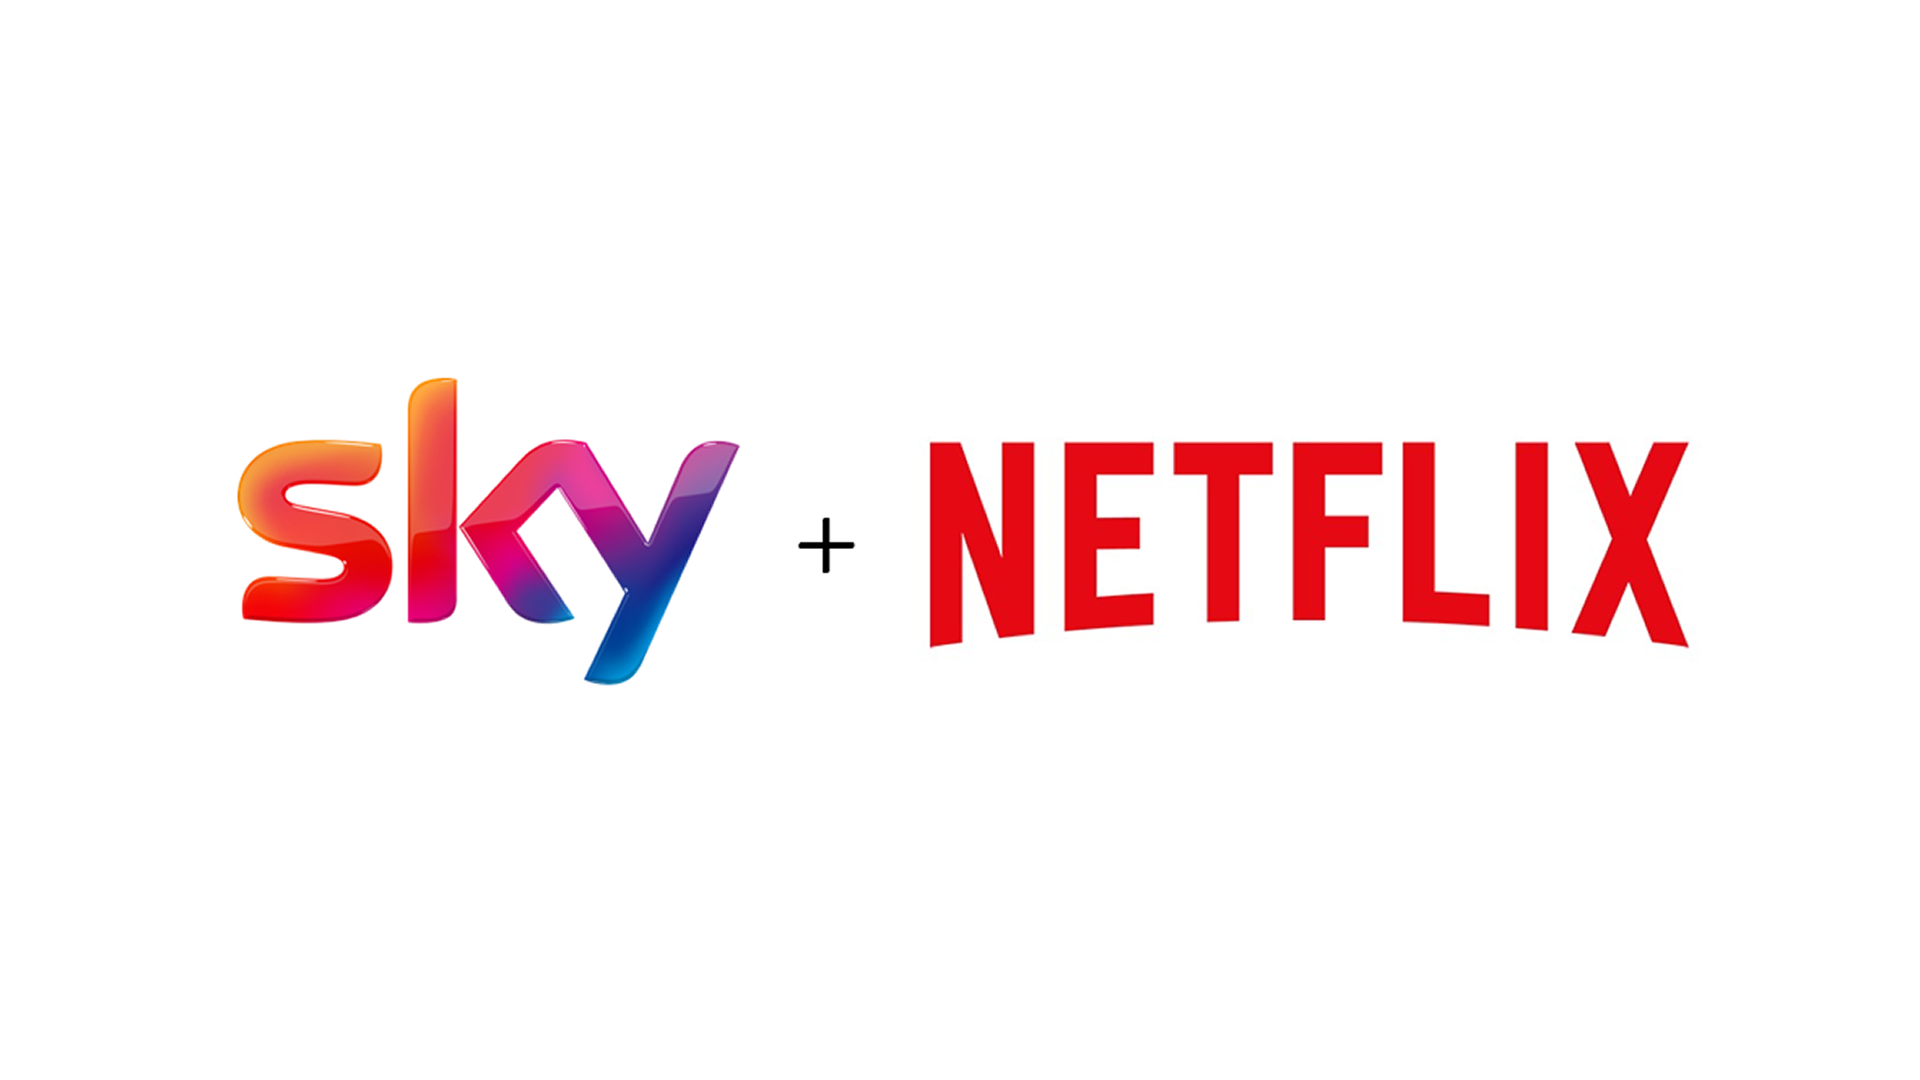 Sky and Netflix